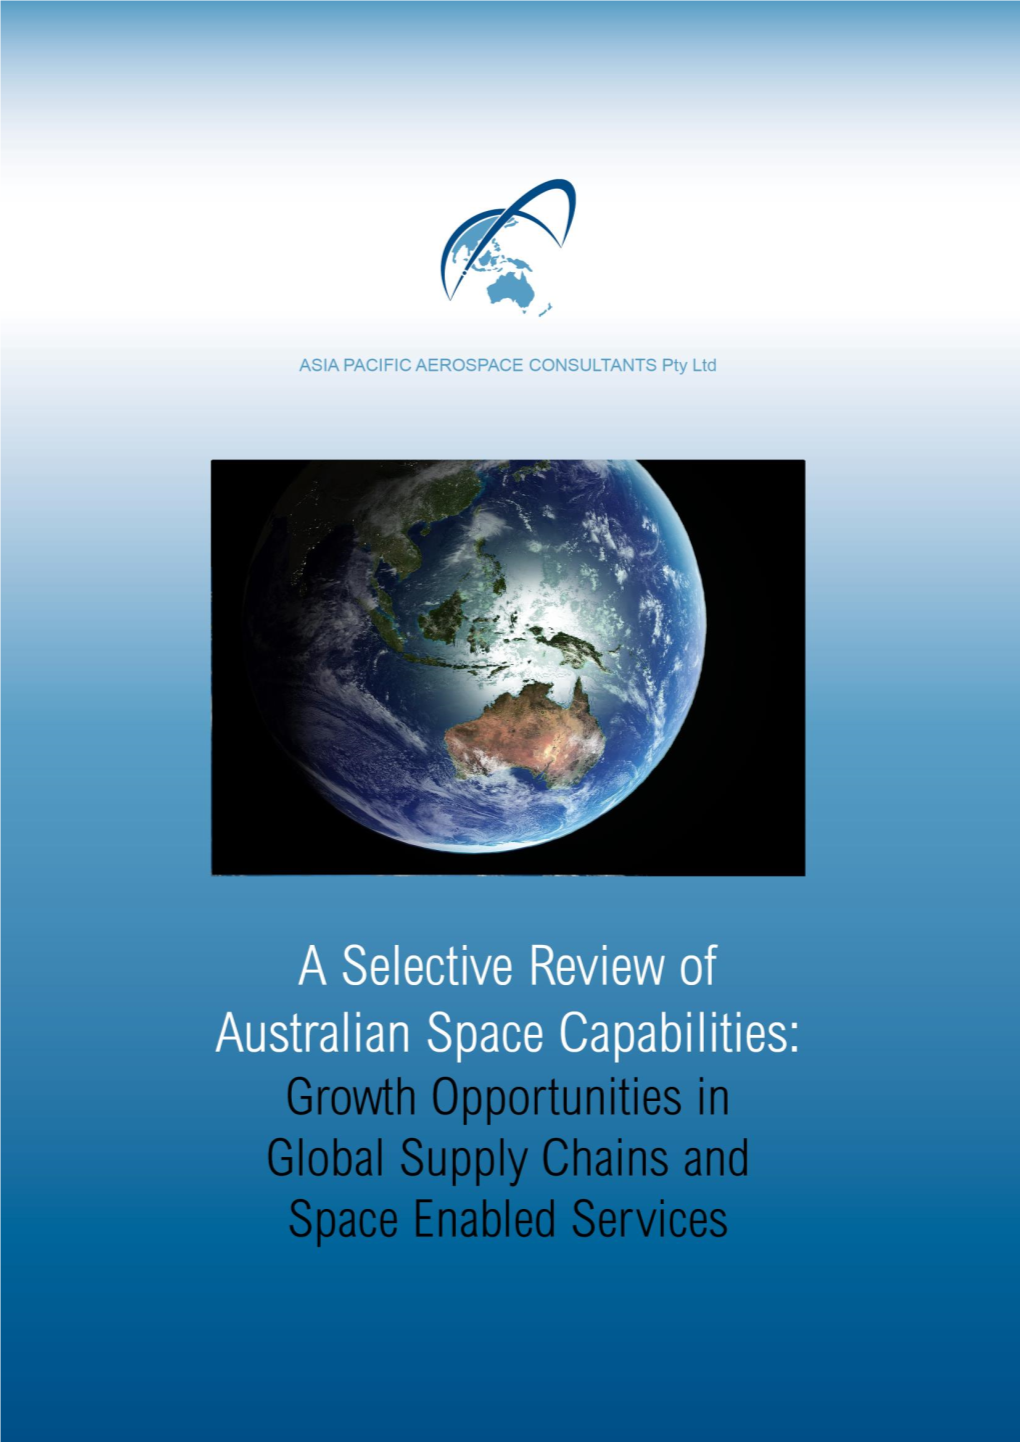 APAC Report on Australian Space Capabilities Revised